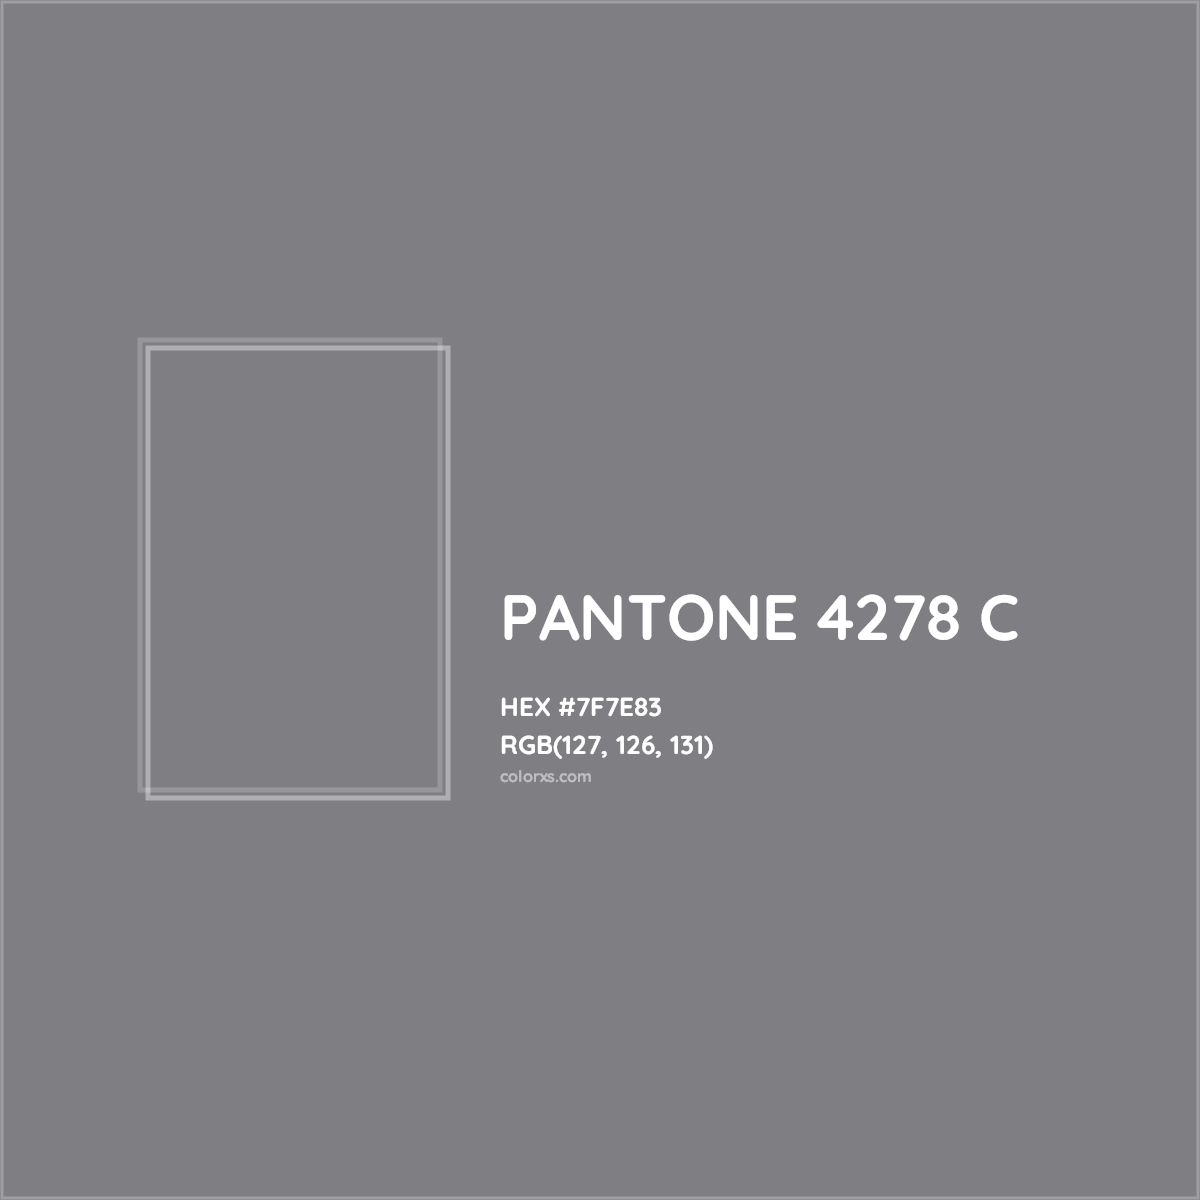 HEX #7F7E83 PANTONE 4278 C CMS Pantone PMS - Color Code